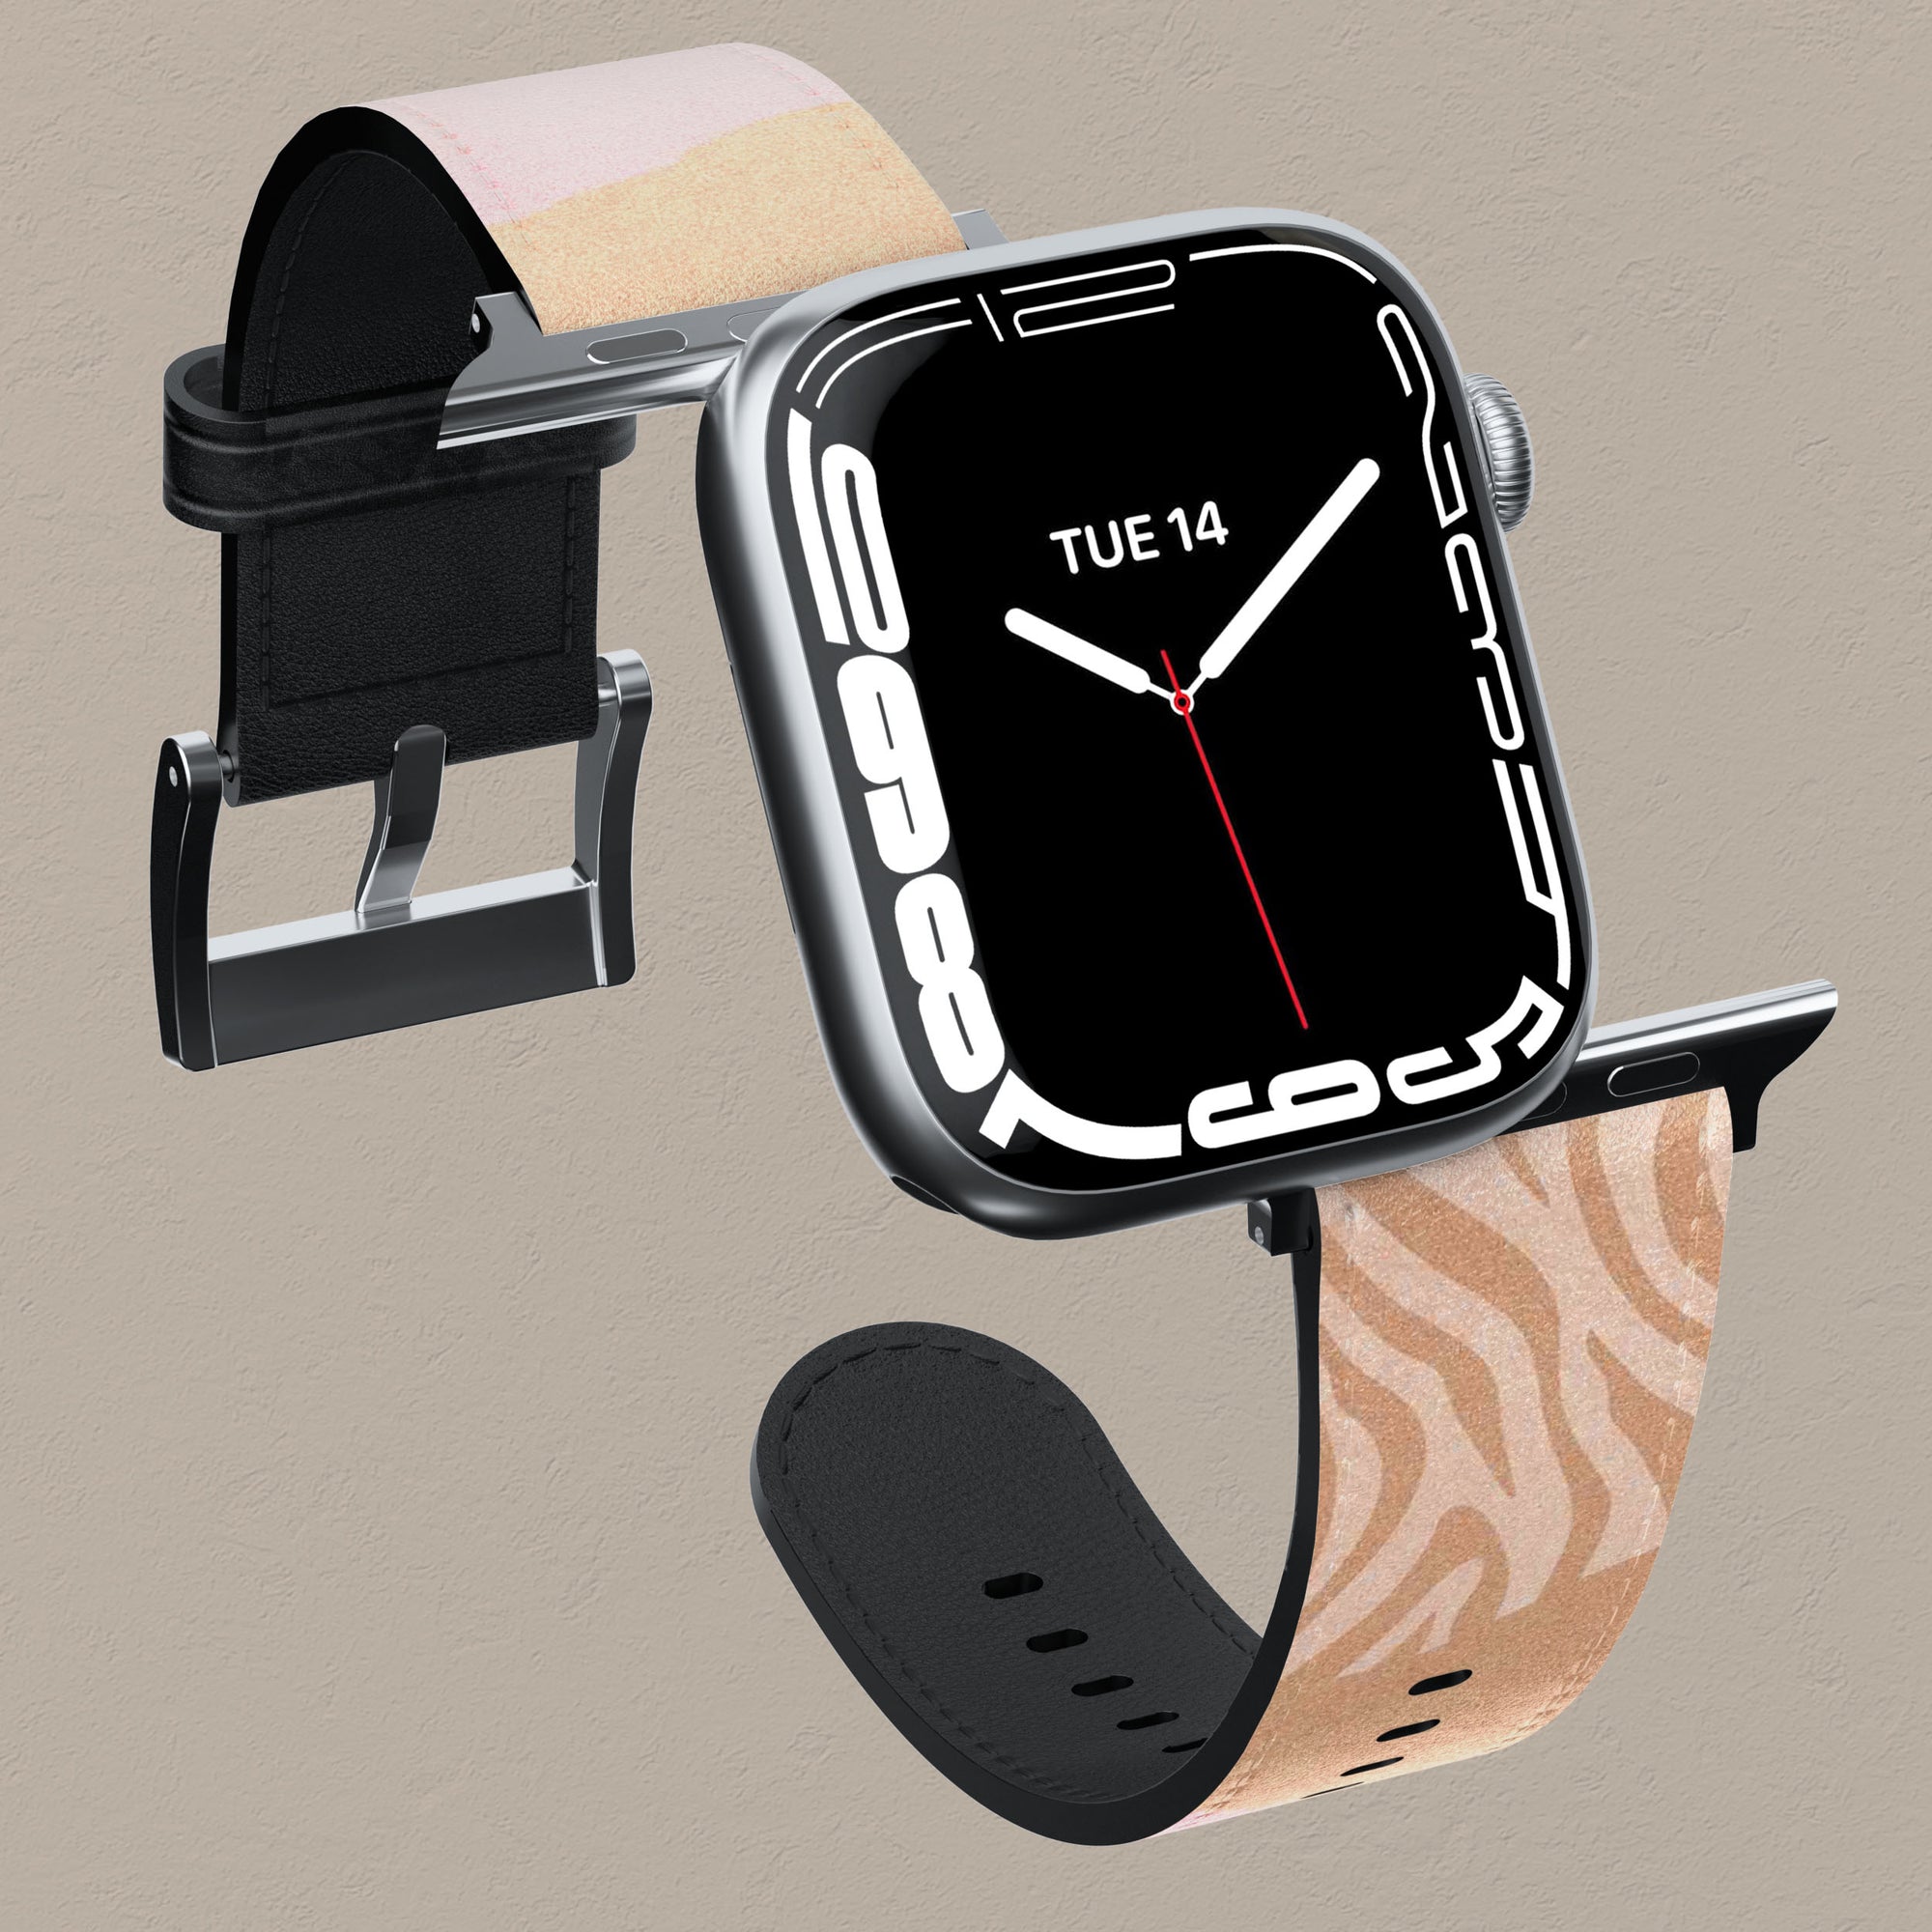 Pink Dreamy Apple Watch Band Apple Watch Band - SALAVISA